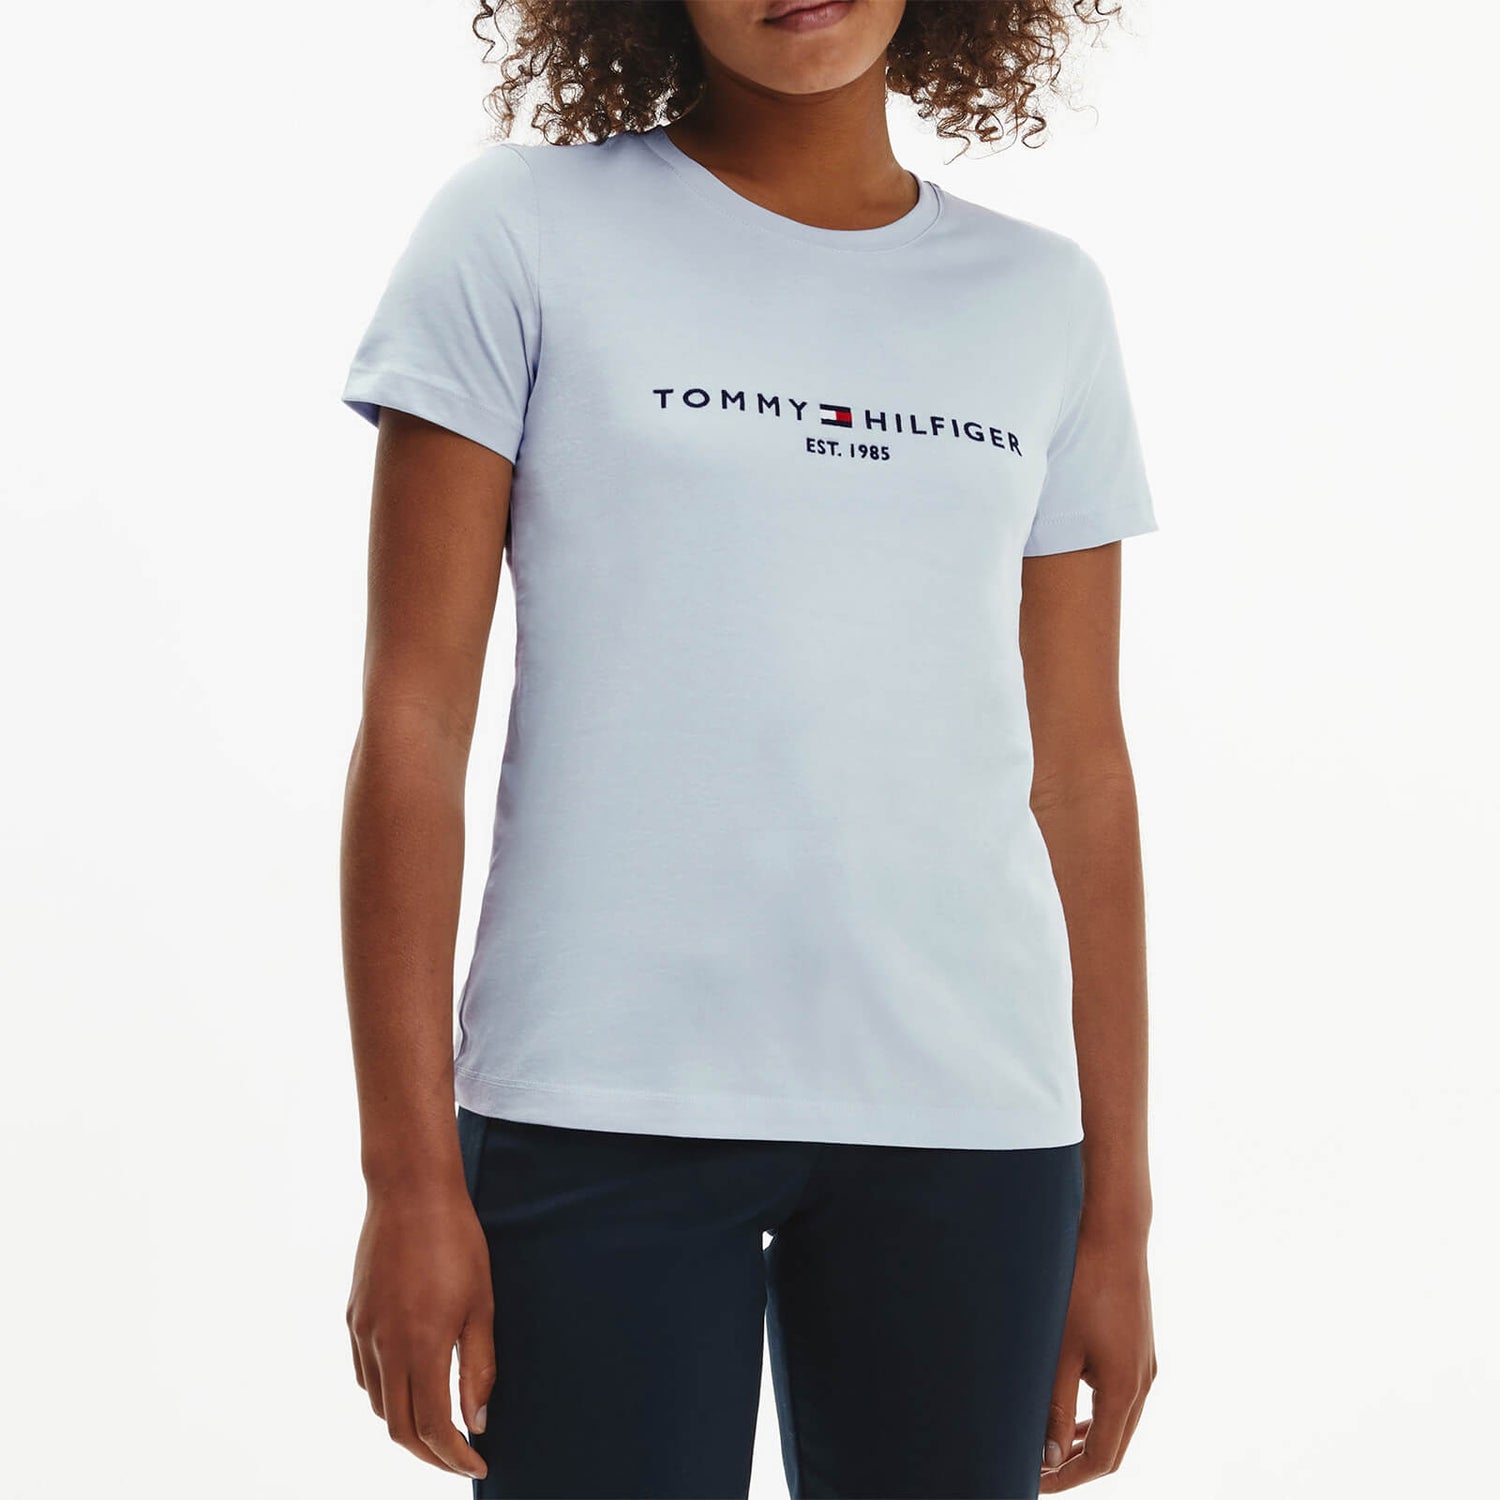 Tommy Hilfiger Women's TH Essentials Hilfiger Regular T-Shirt - Breezy Blue